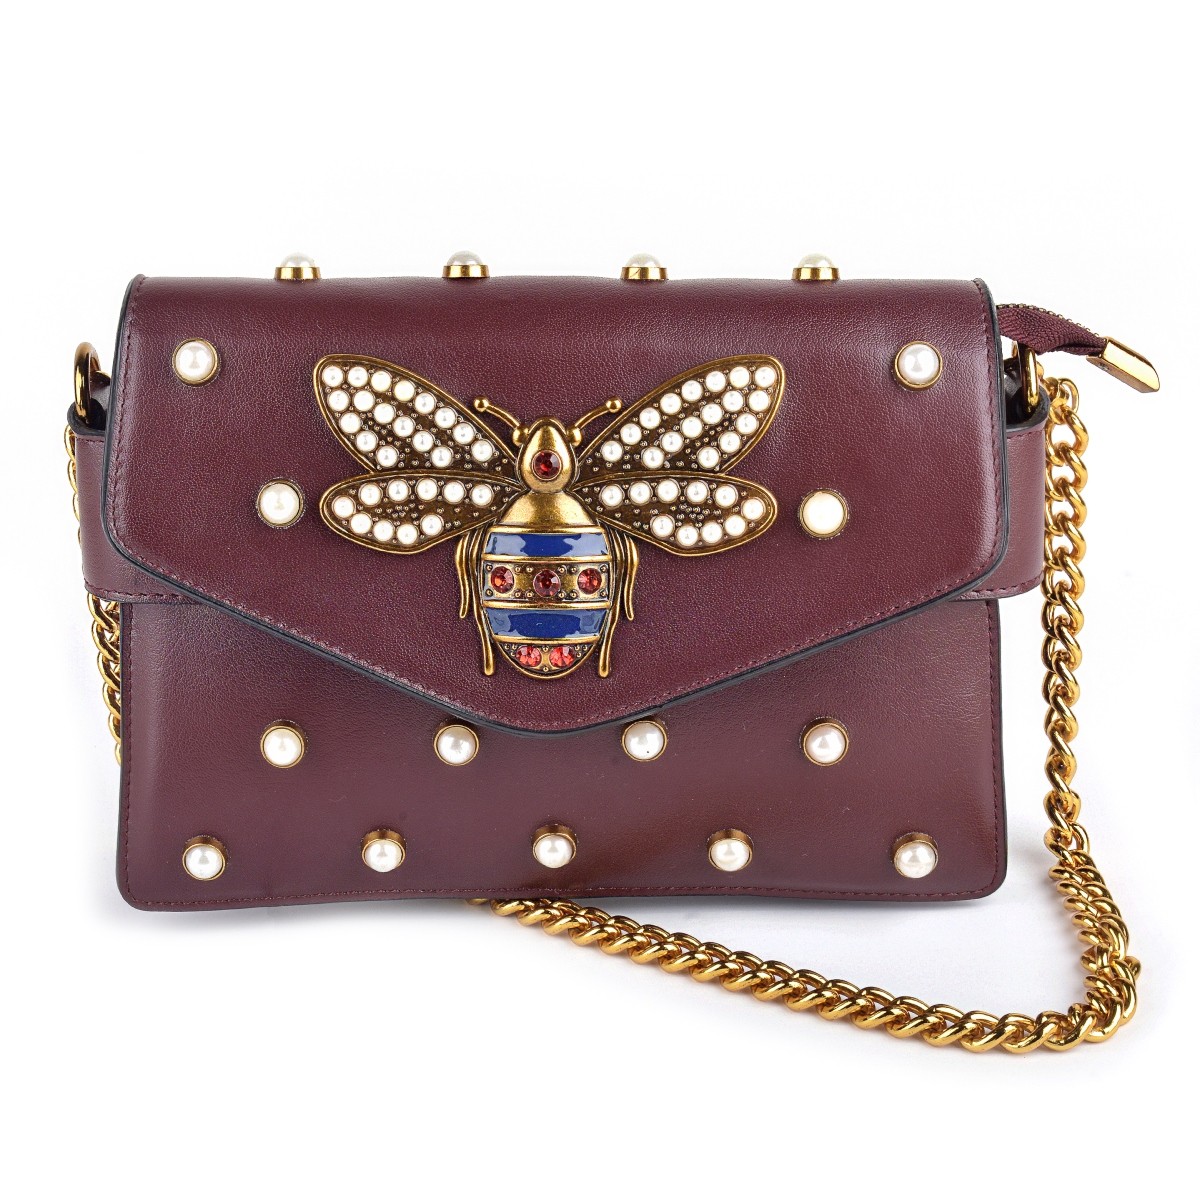 Gucci style Handbag